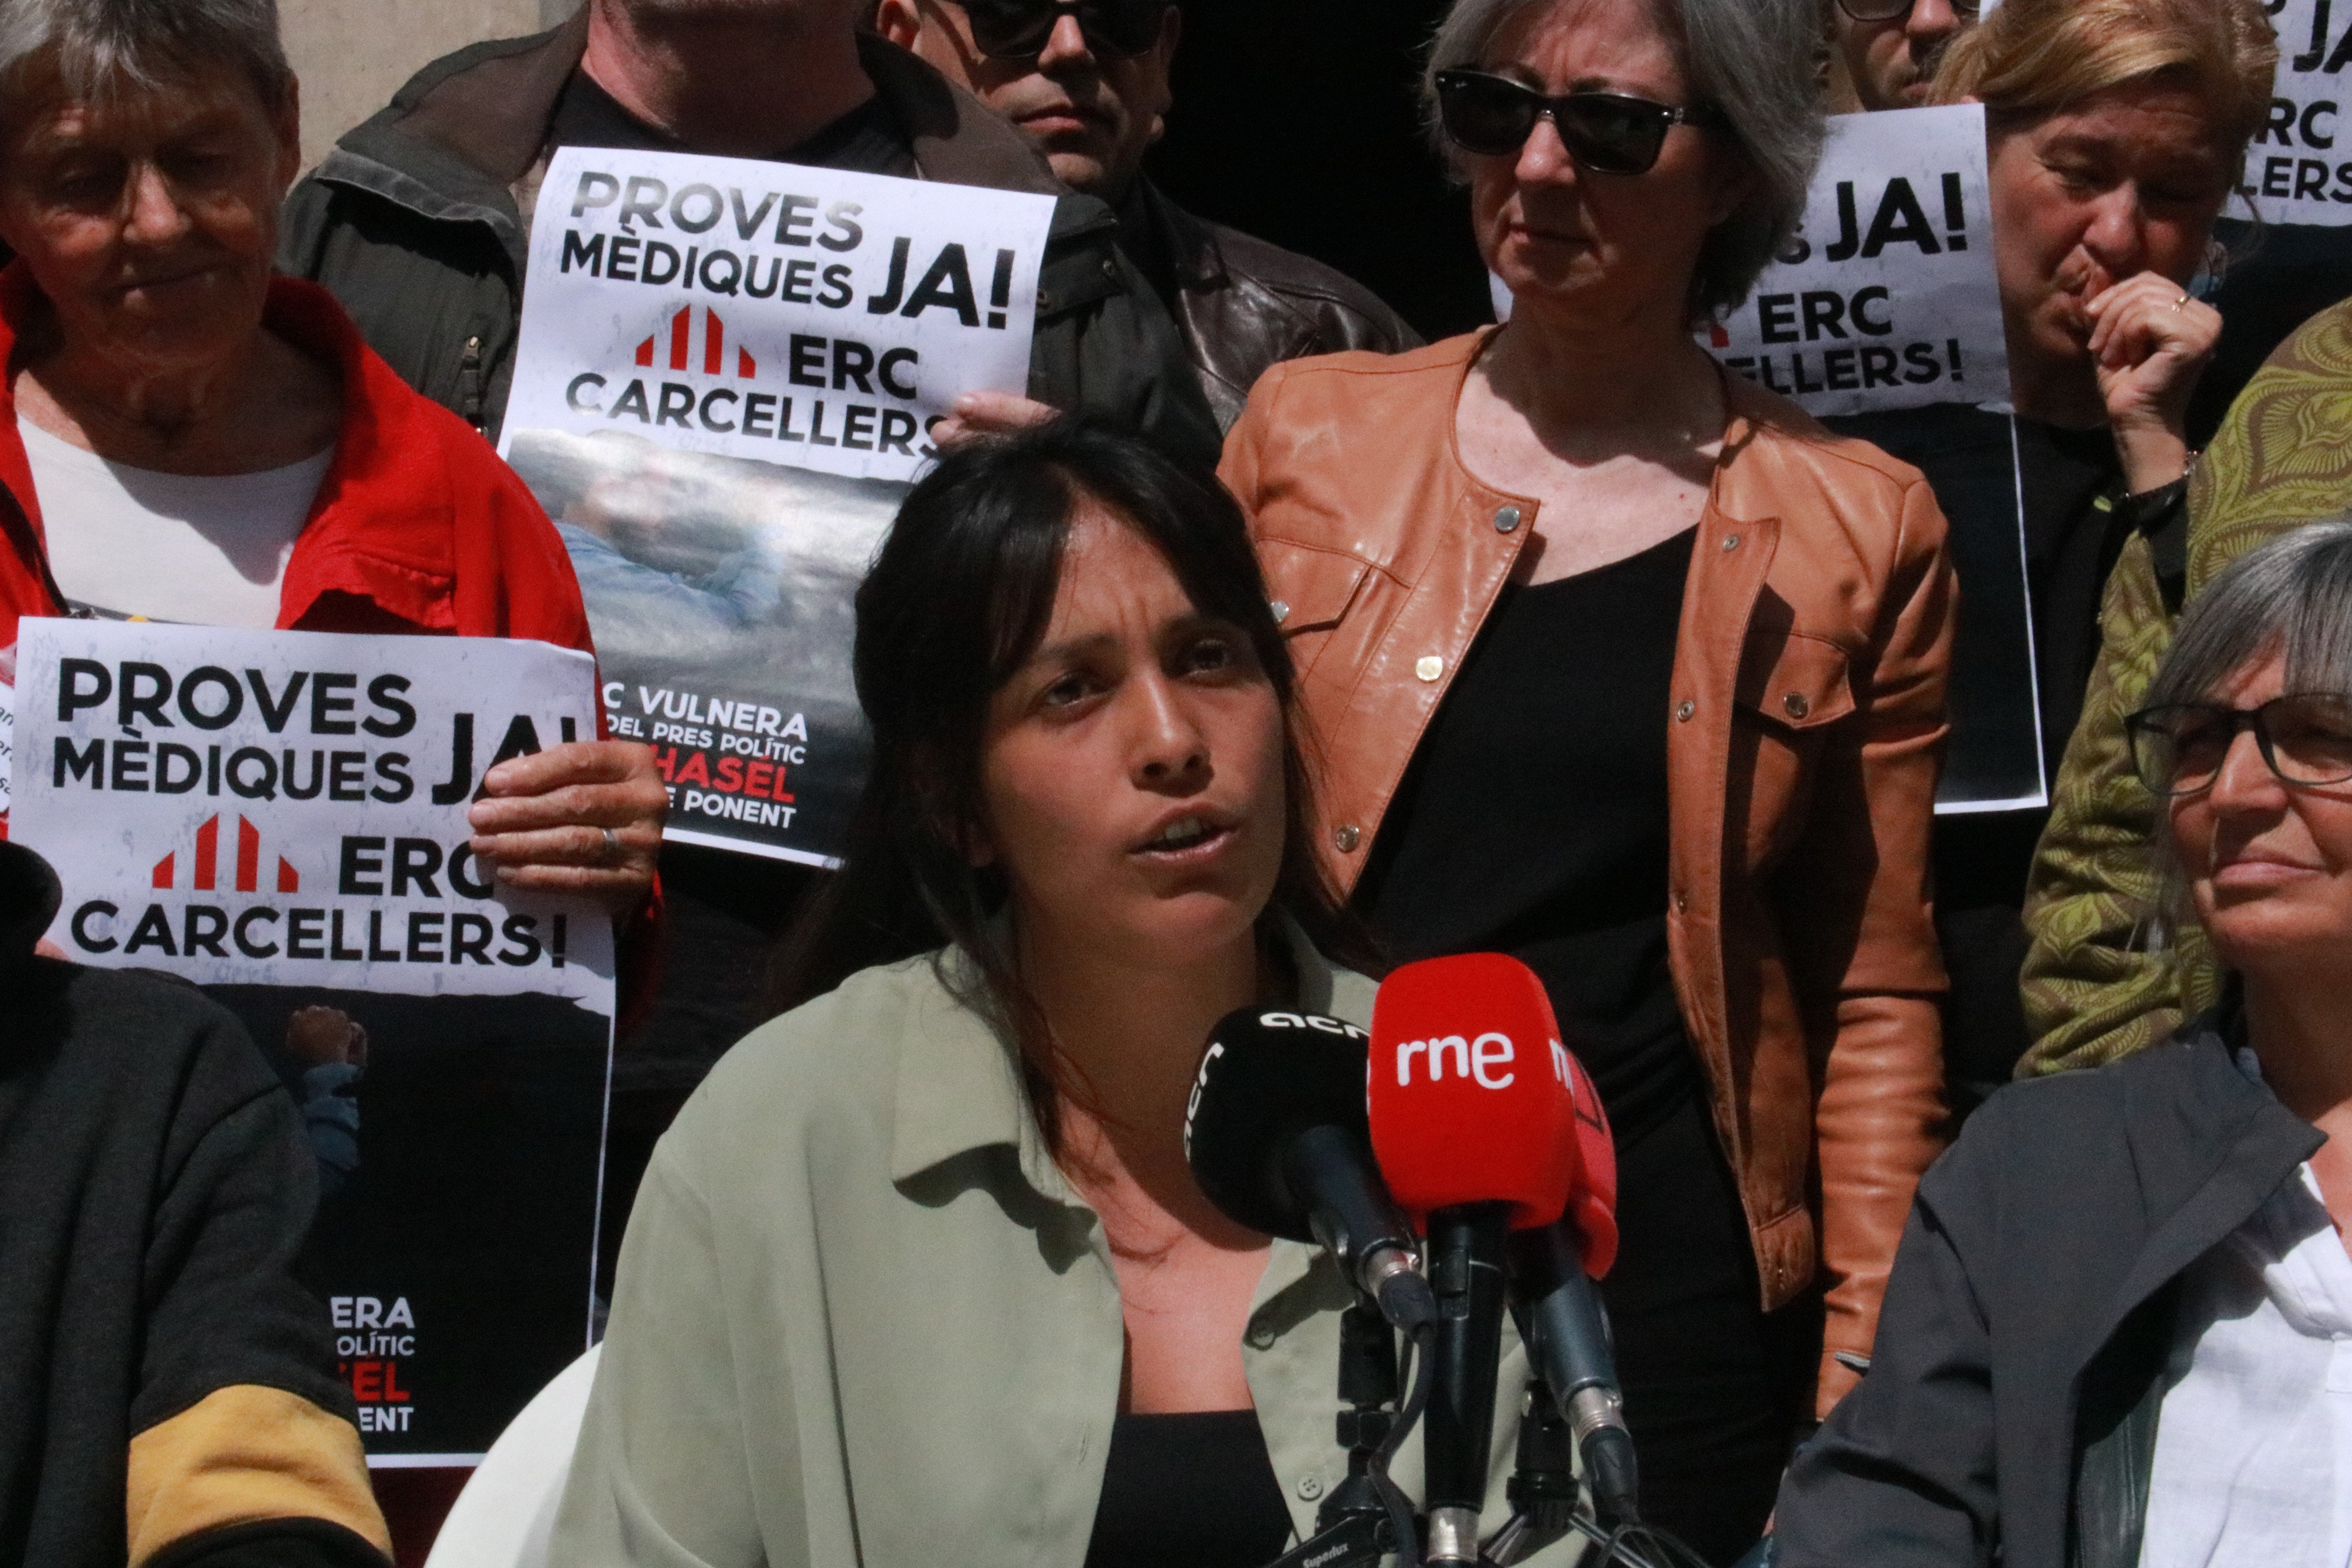 Pablo Hasél se querella contra el conseller Joan Ignasi Elena: "¡ERC carceleros!"